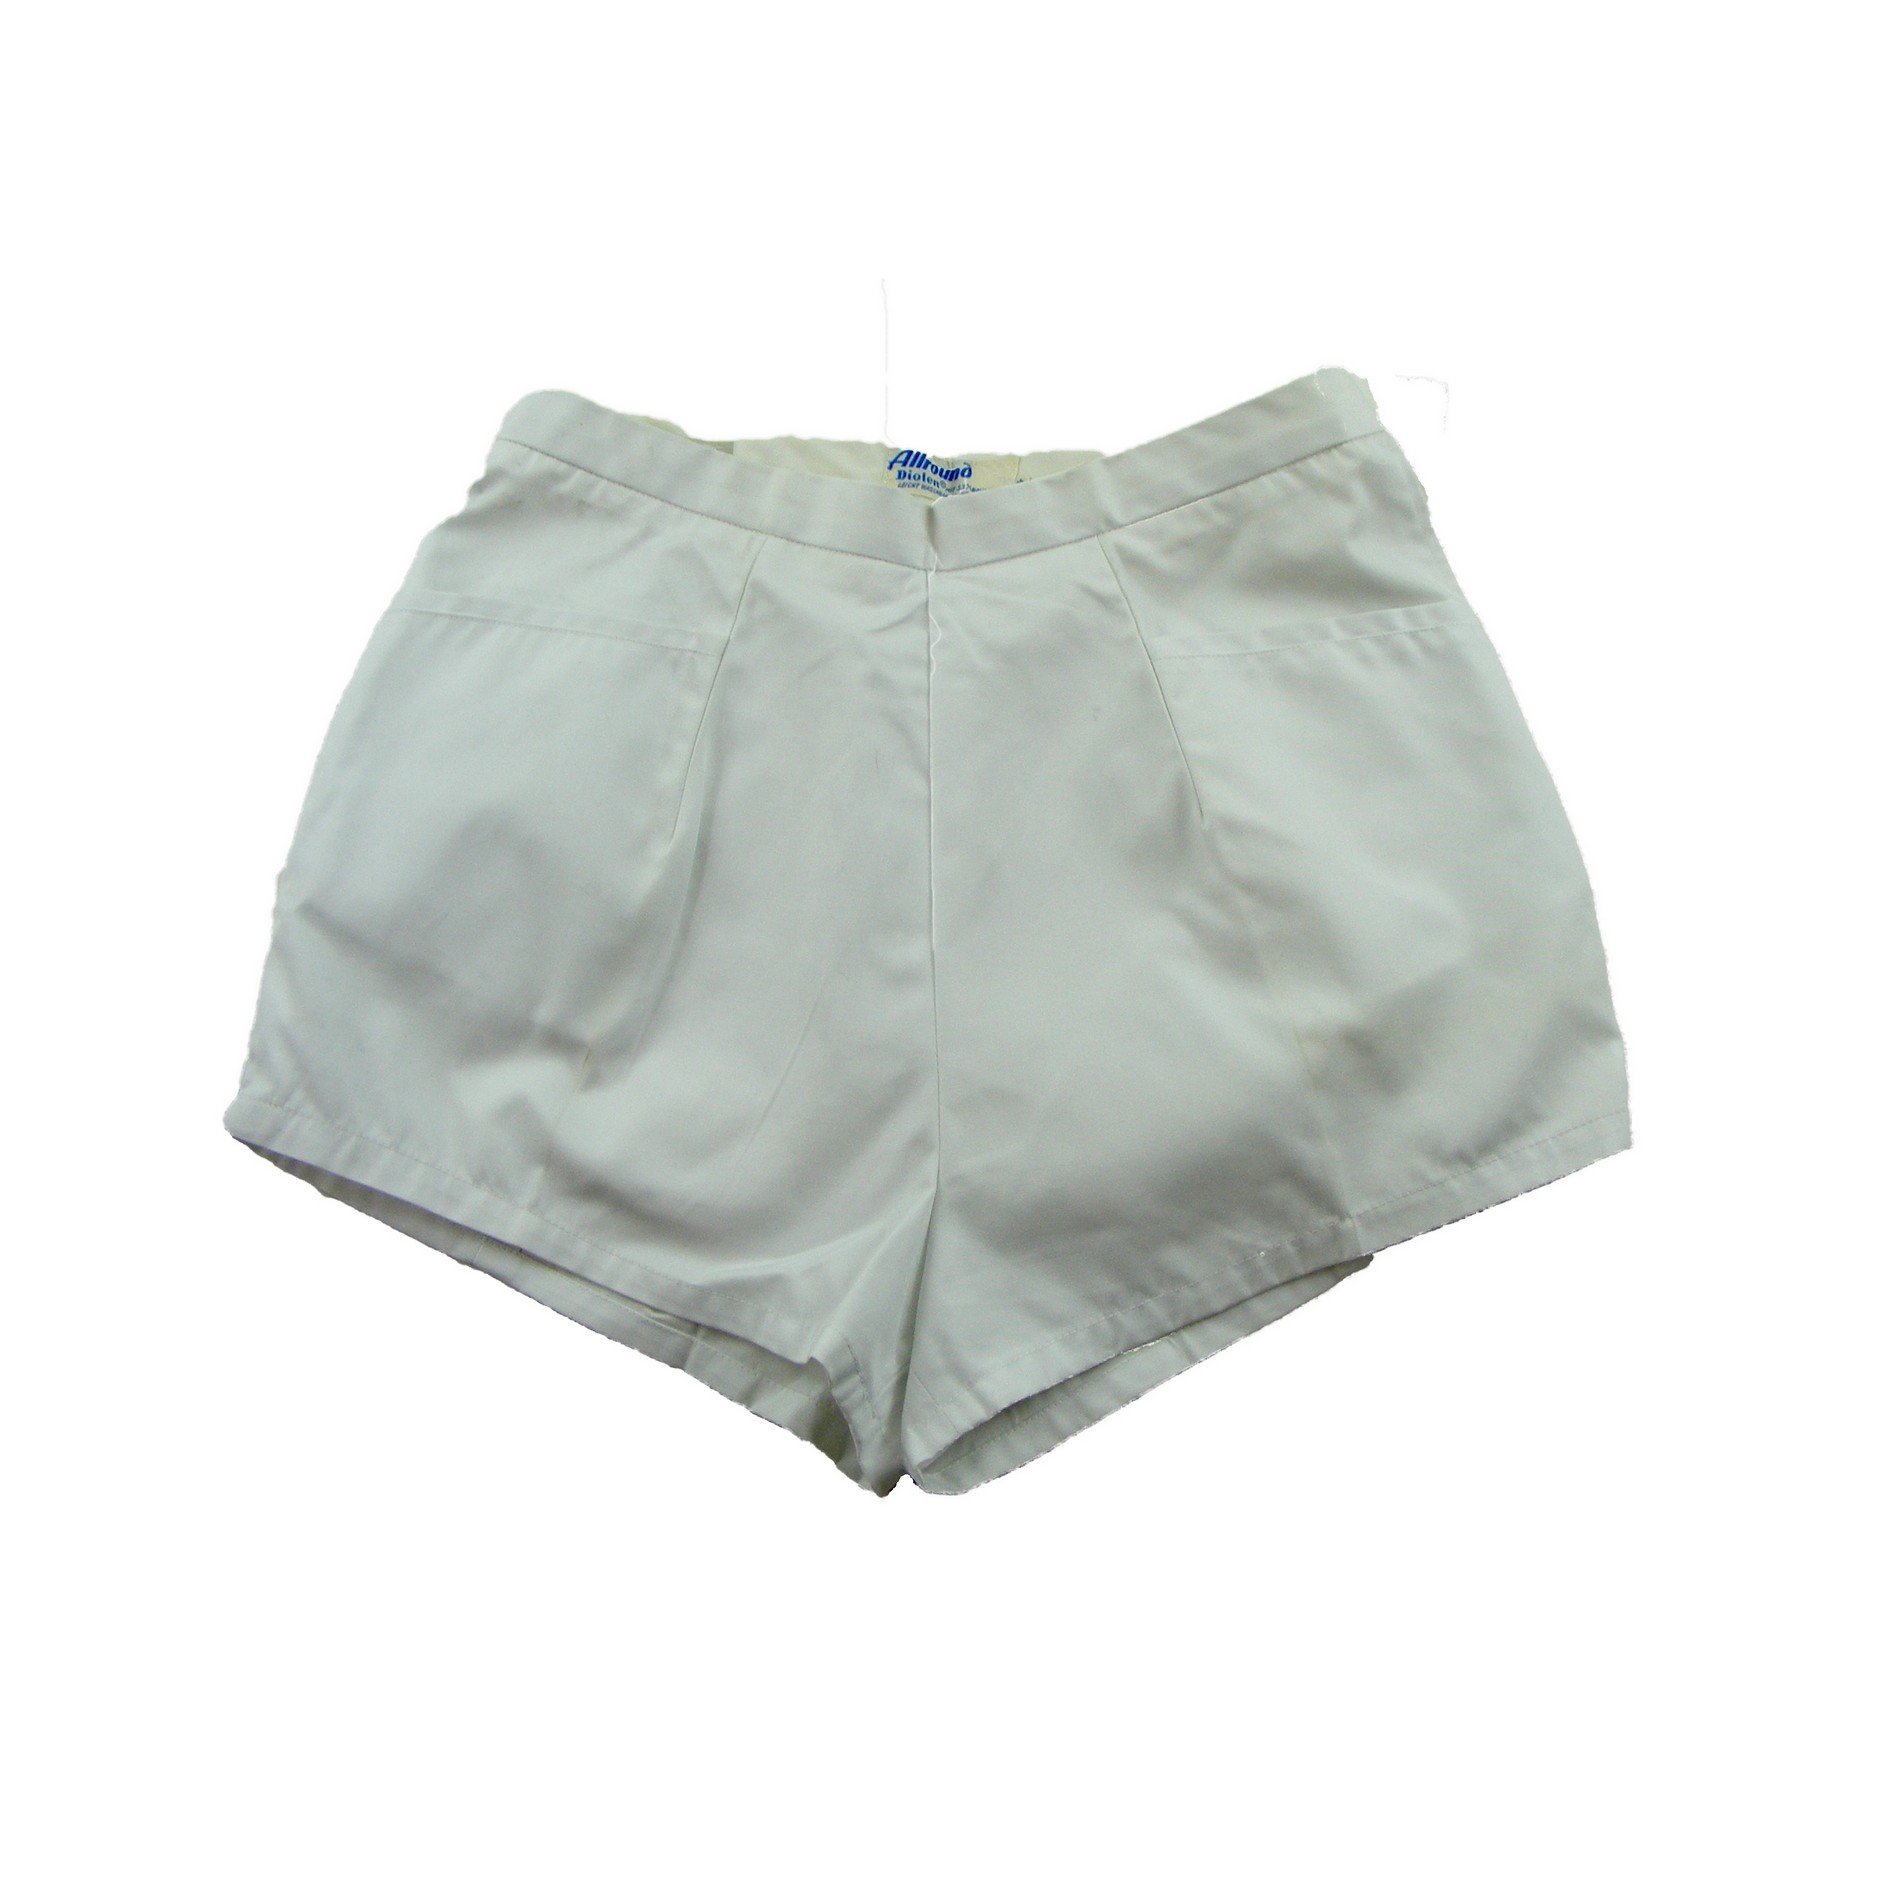 60s white tennis shorts - Blue 17 Vintage Clothing